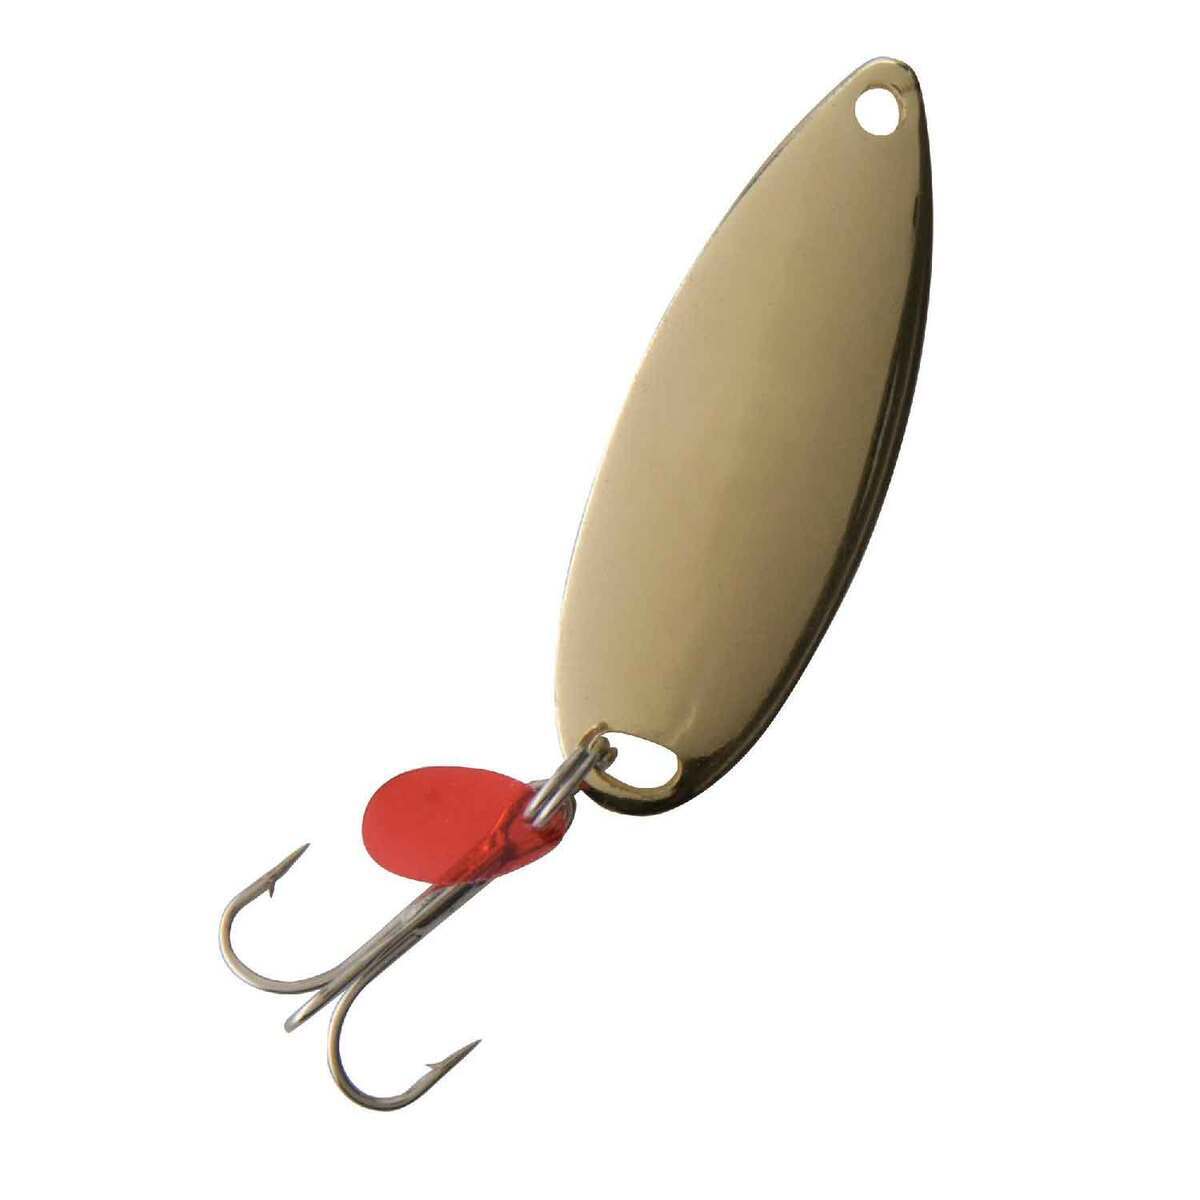  Berkley Johnson Sprite Fishing Hard Bait, Gold - Redfish Kit,  2 1/2in - 3/4 oz : Fishing Spoons : Sports & Outdoors